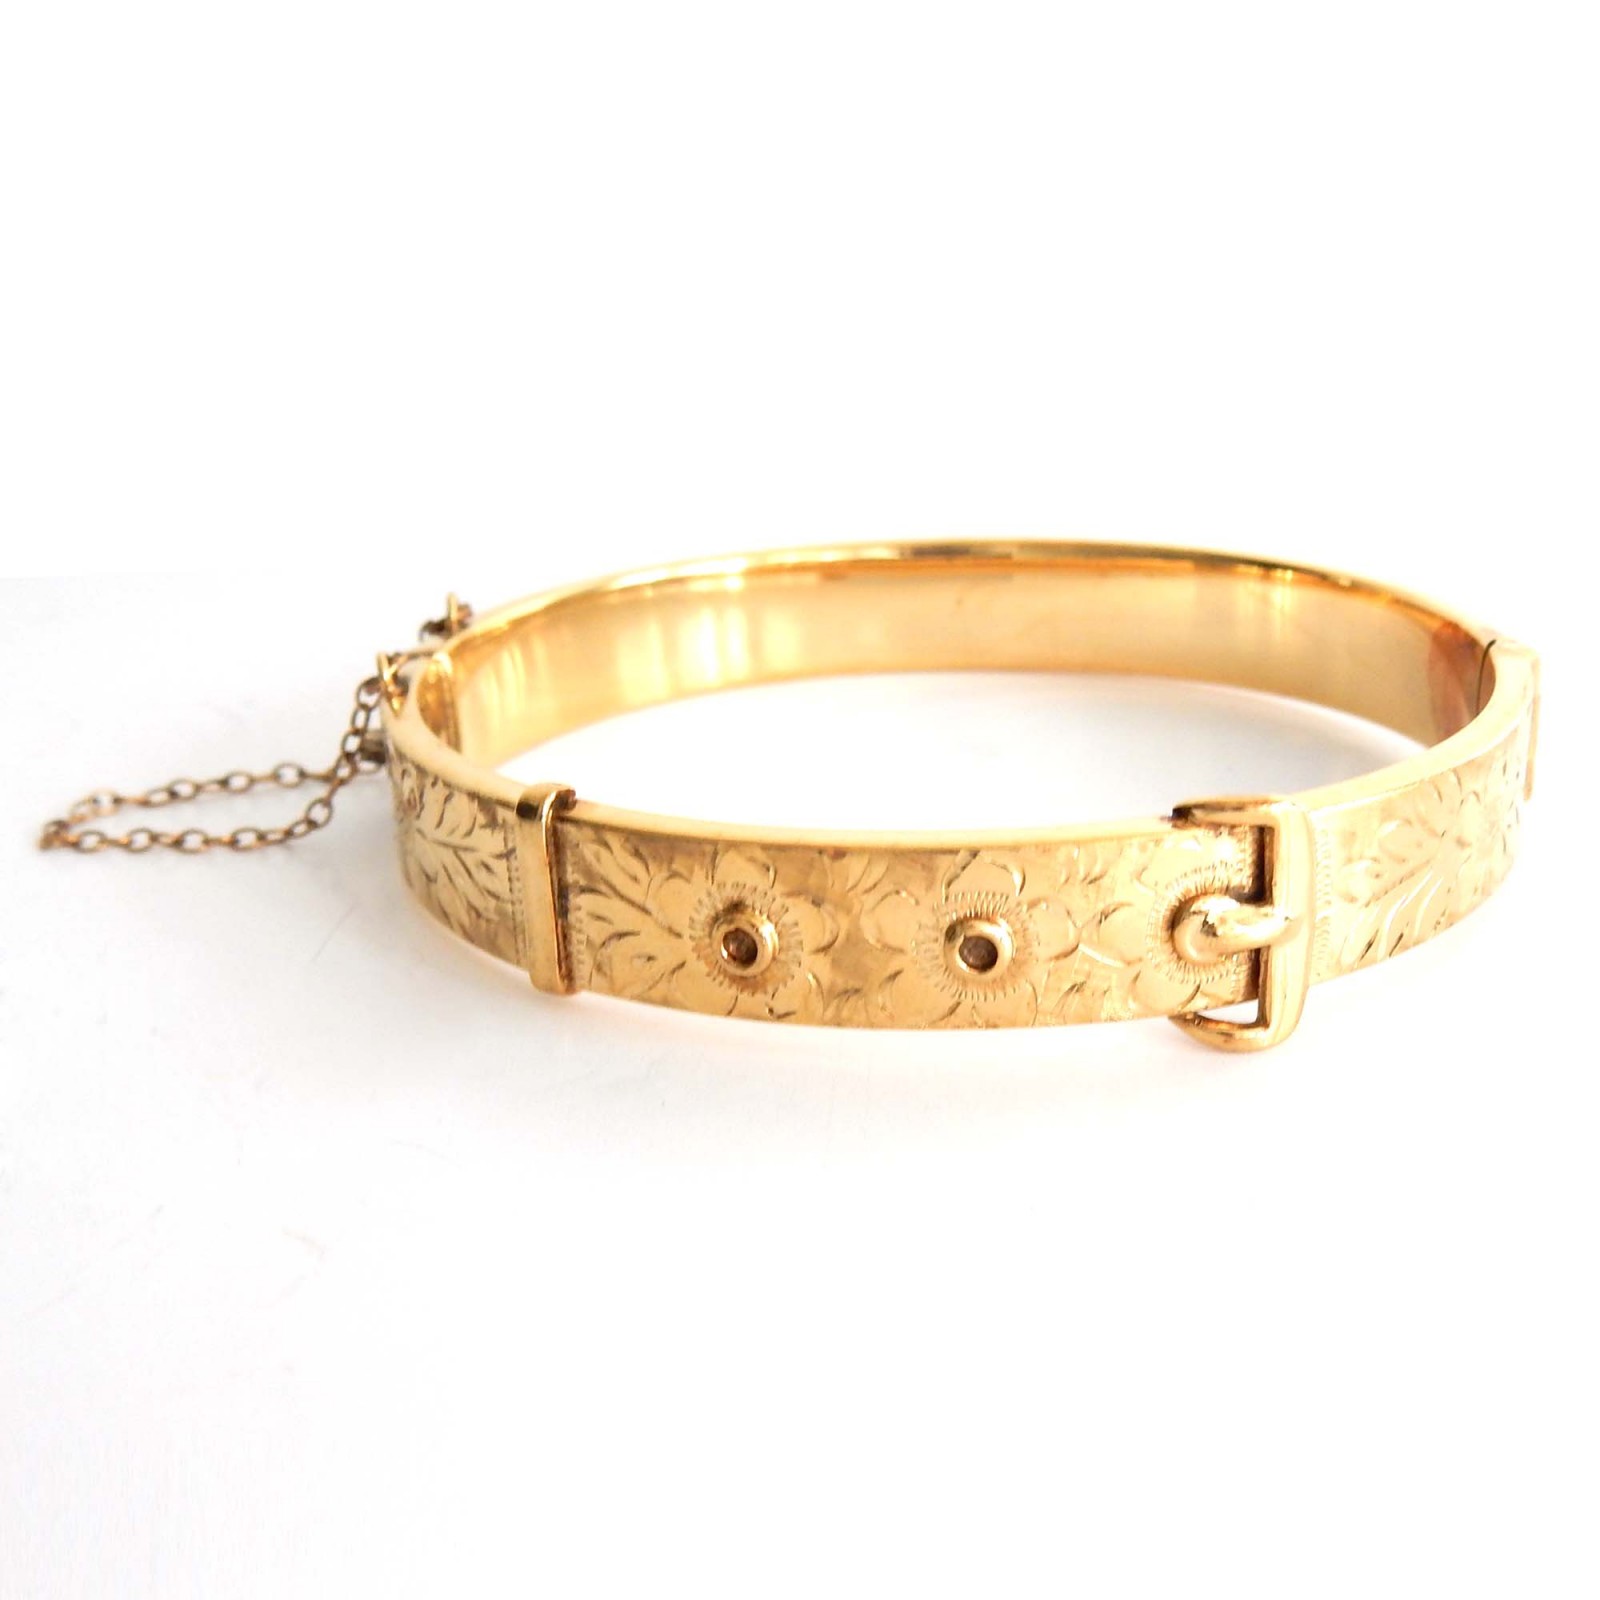 Vintage Brevettato 18ct Gold Buckle Bracelet - Jewellery Discovery